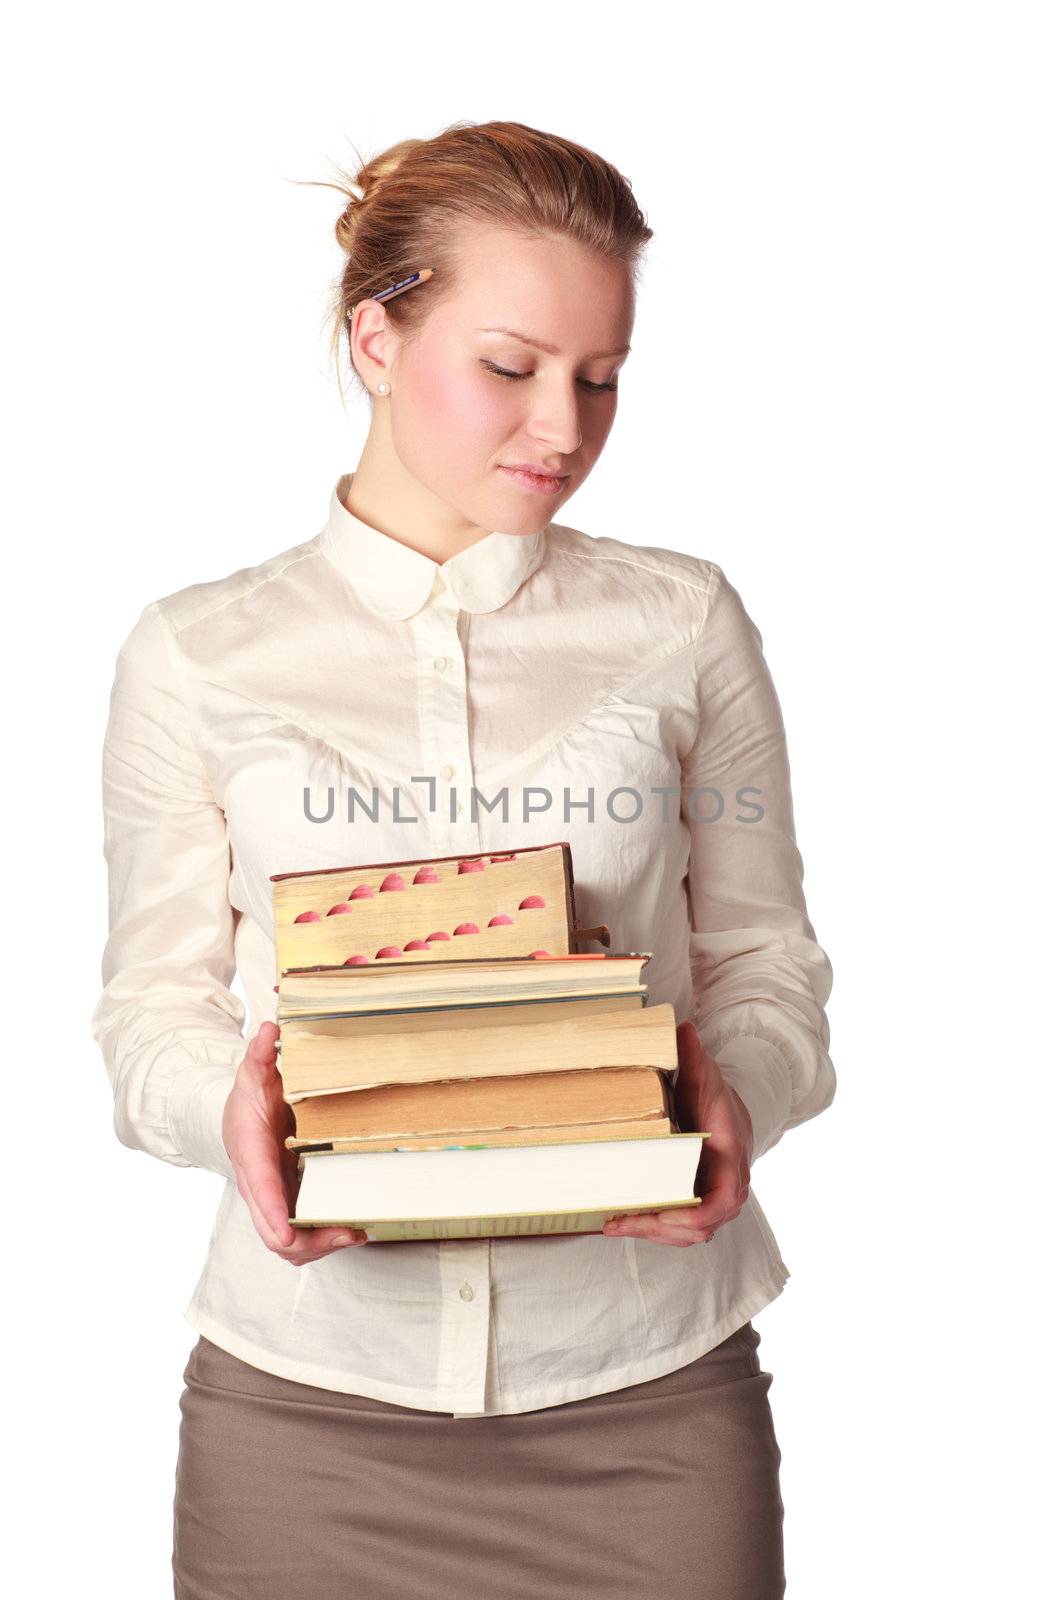 shy teacher with books by petr_malyshev